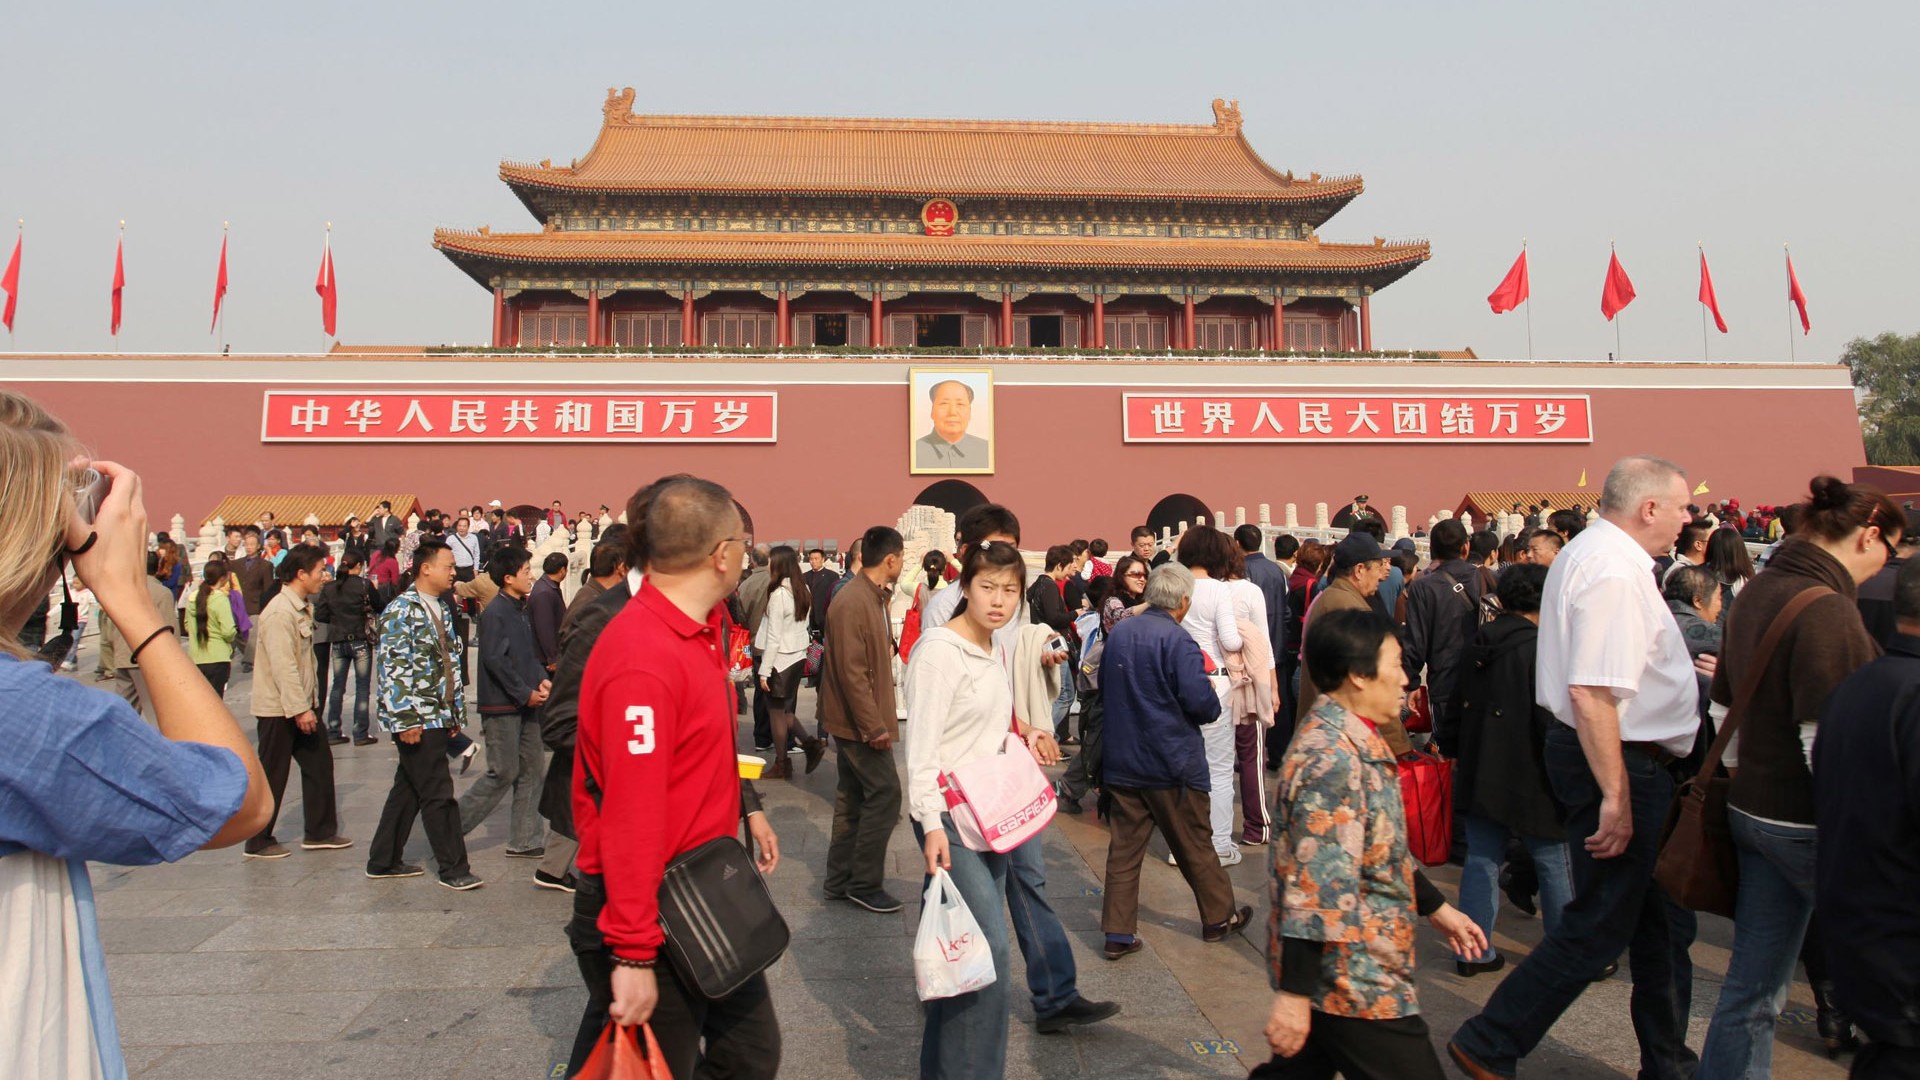 Tour Beijing - Tiananmen Square (ggc works) #12 - 1920x1080